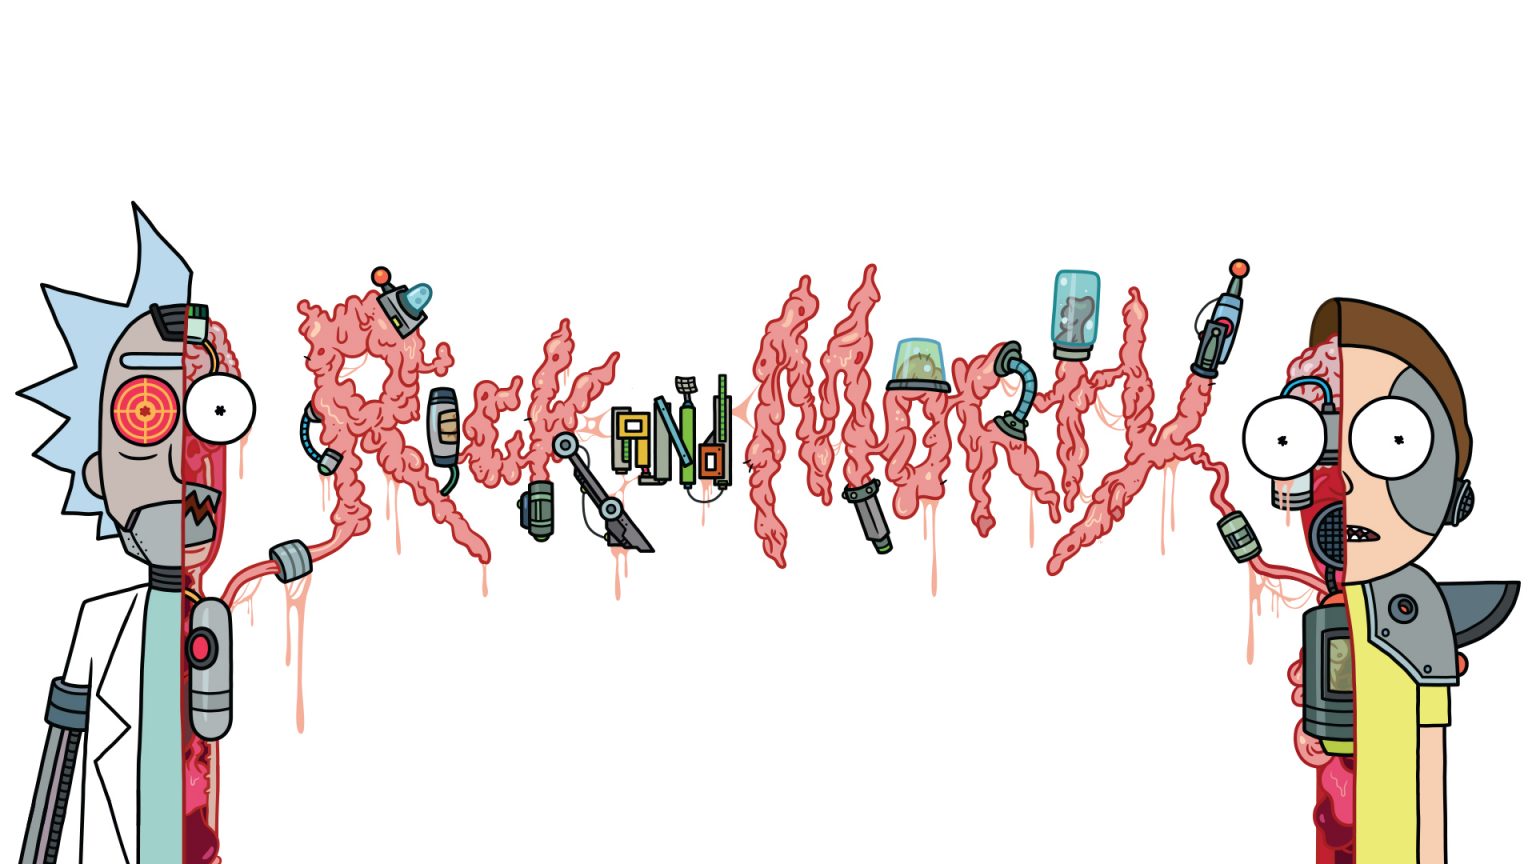 rick and morty season 5 episode 1 countdown